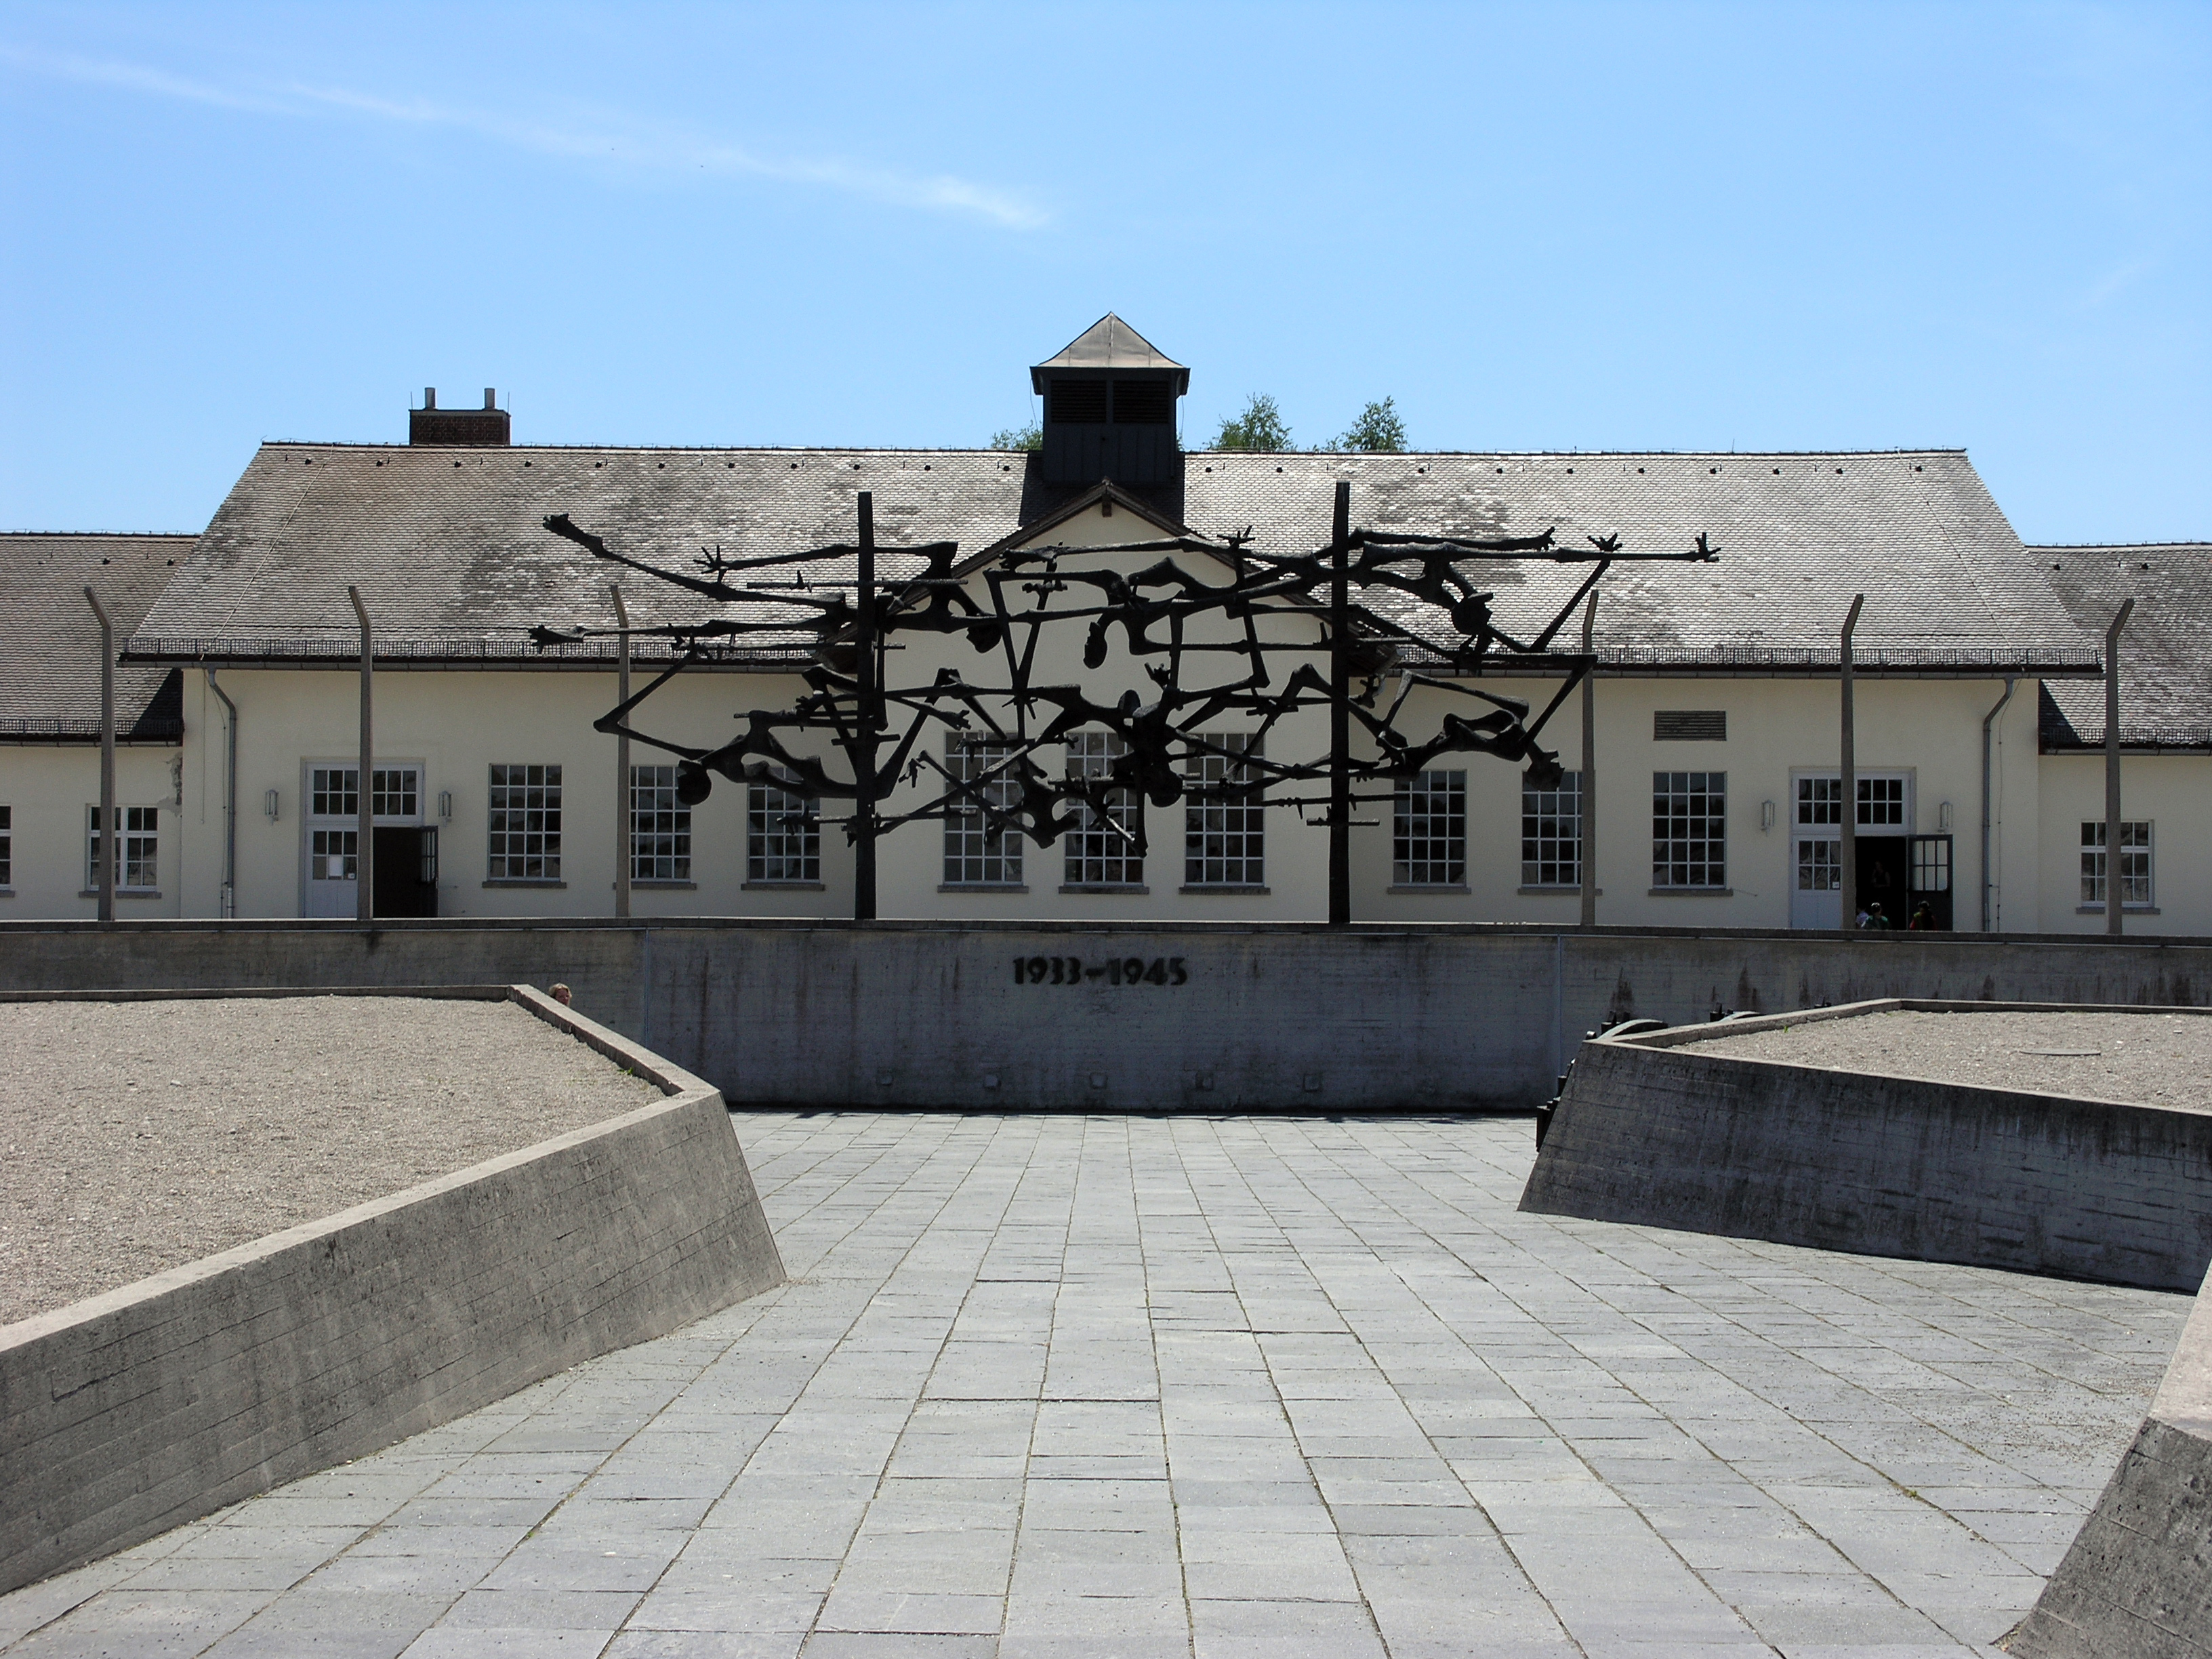 A memorial at Dachau. | <a href="https://commons.wikimedia.org/wiki/File%3ADachau-WM2.jpg">By Wolfgang Manousek</a> [CC BY 2.0], via Wikimedia Commons